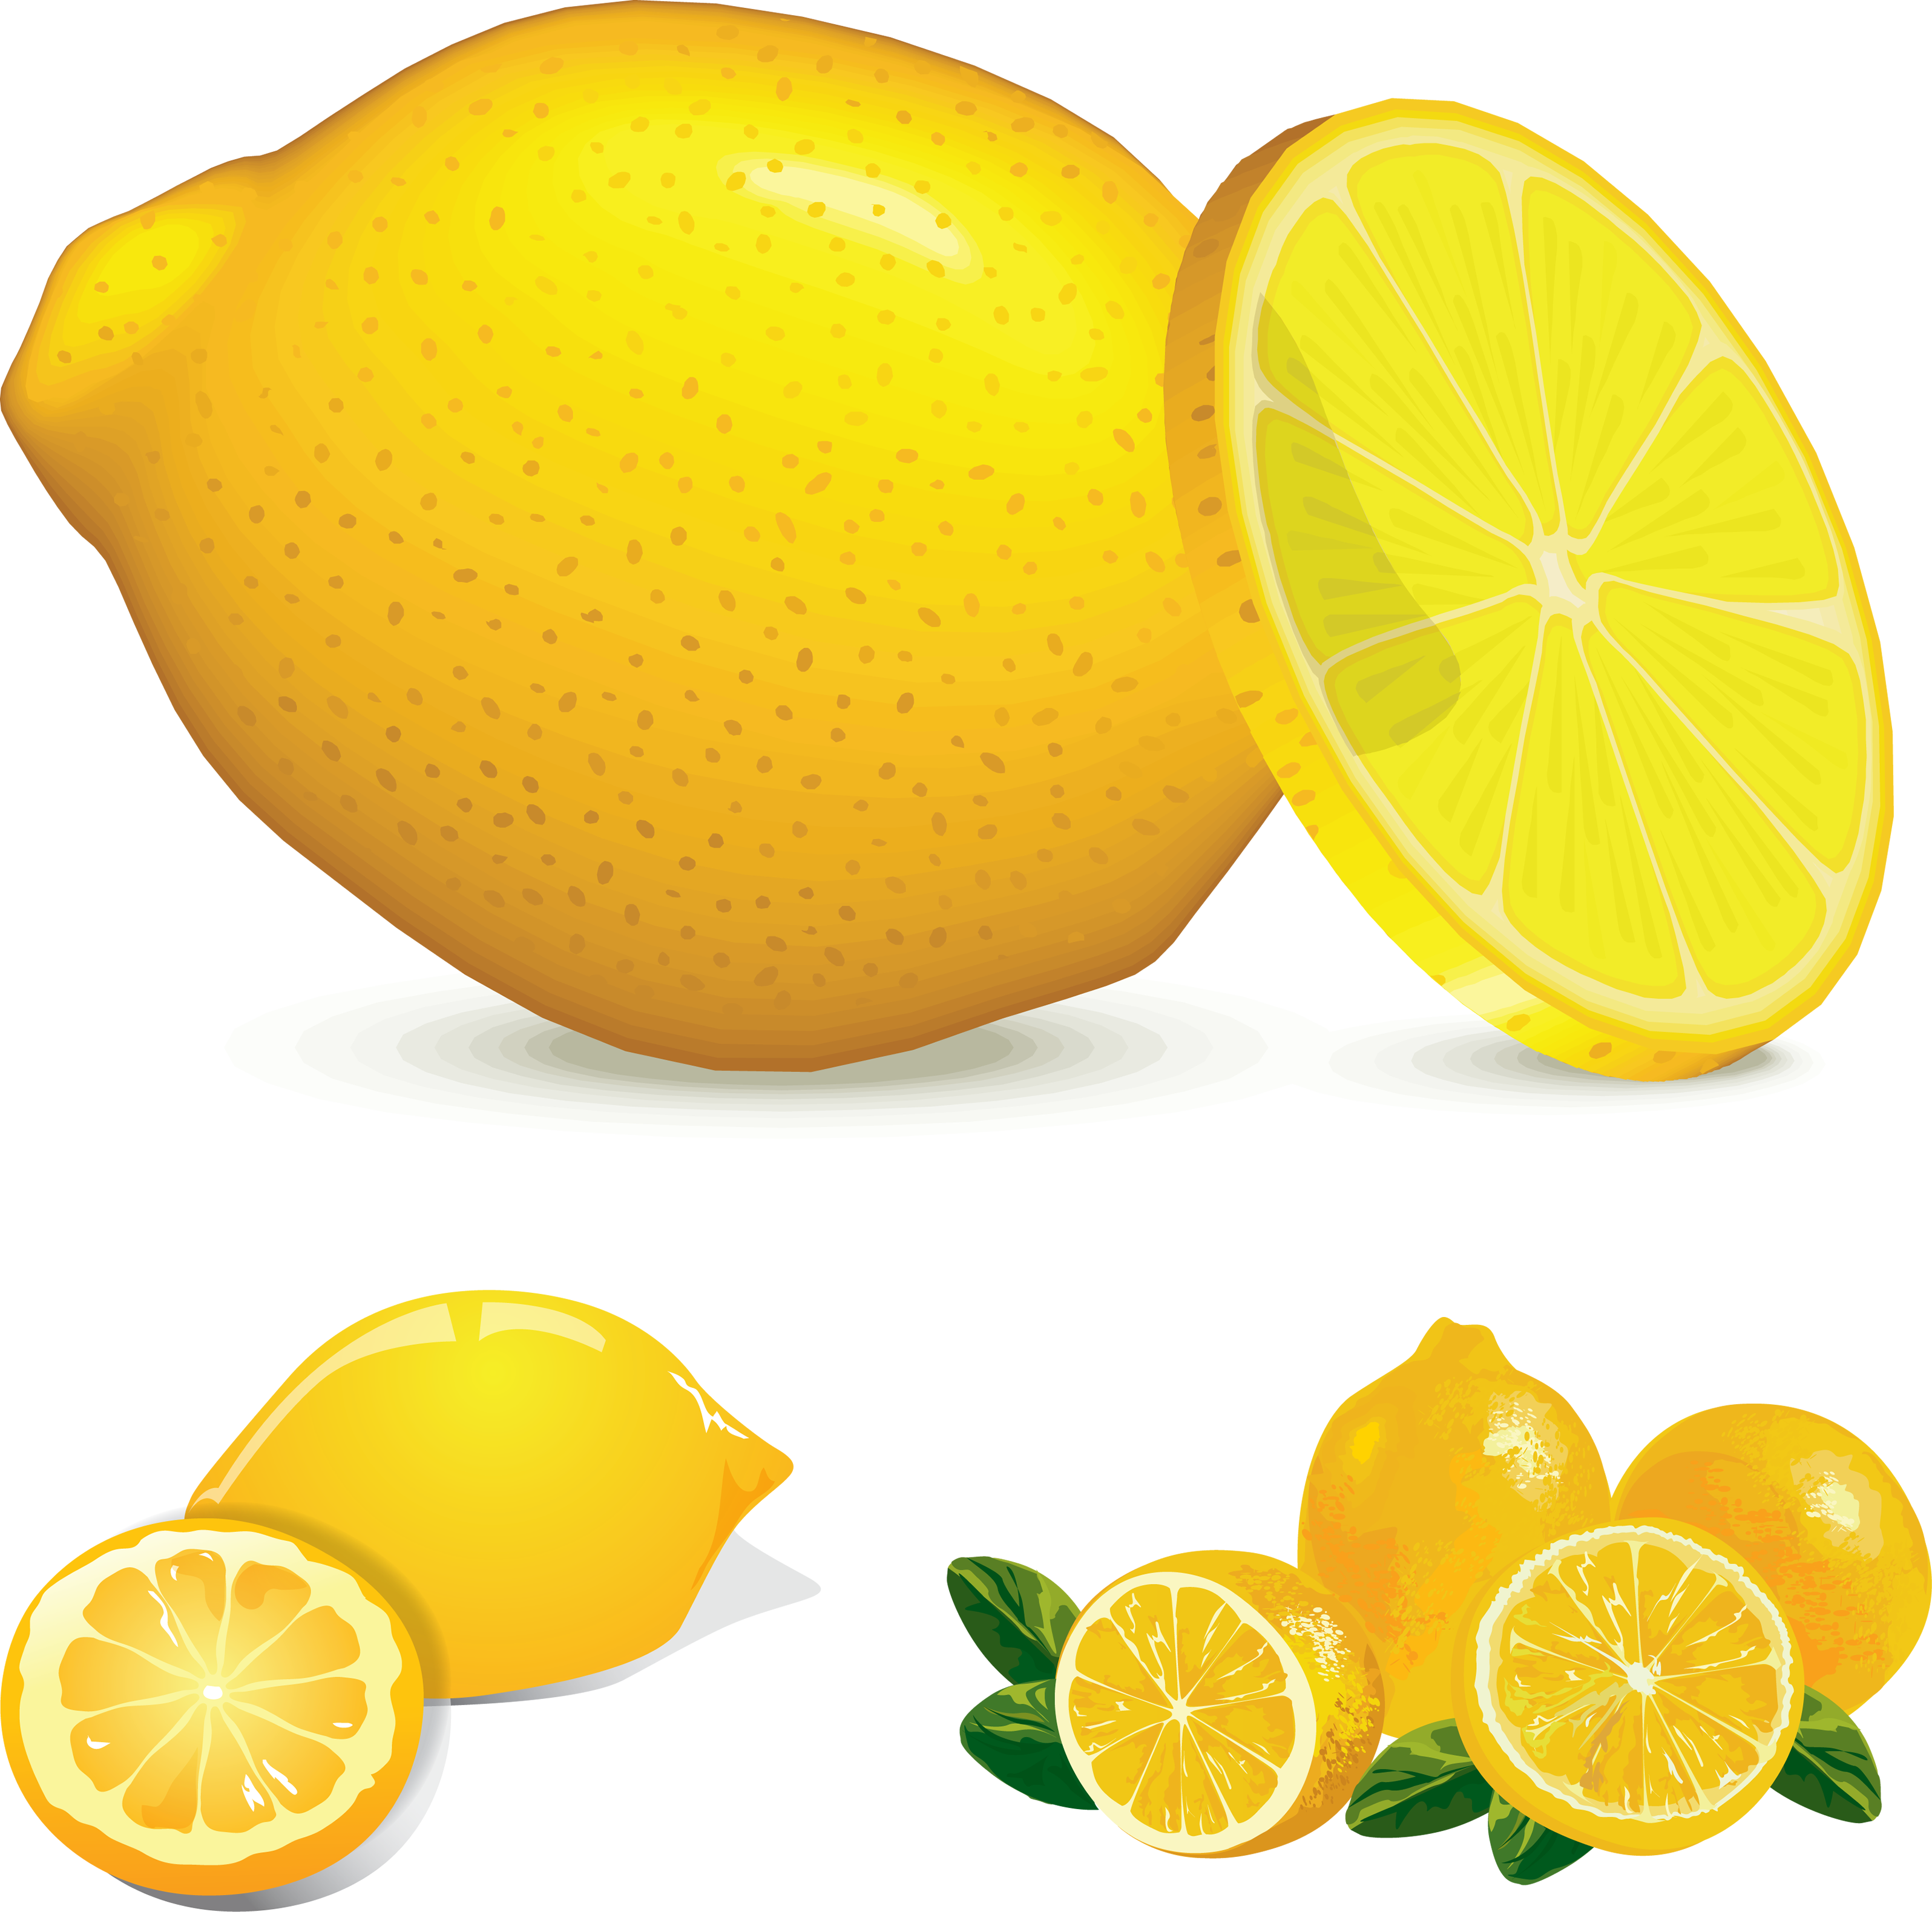 Lemon Images Fruit Pictures Download Png Clipart